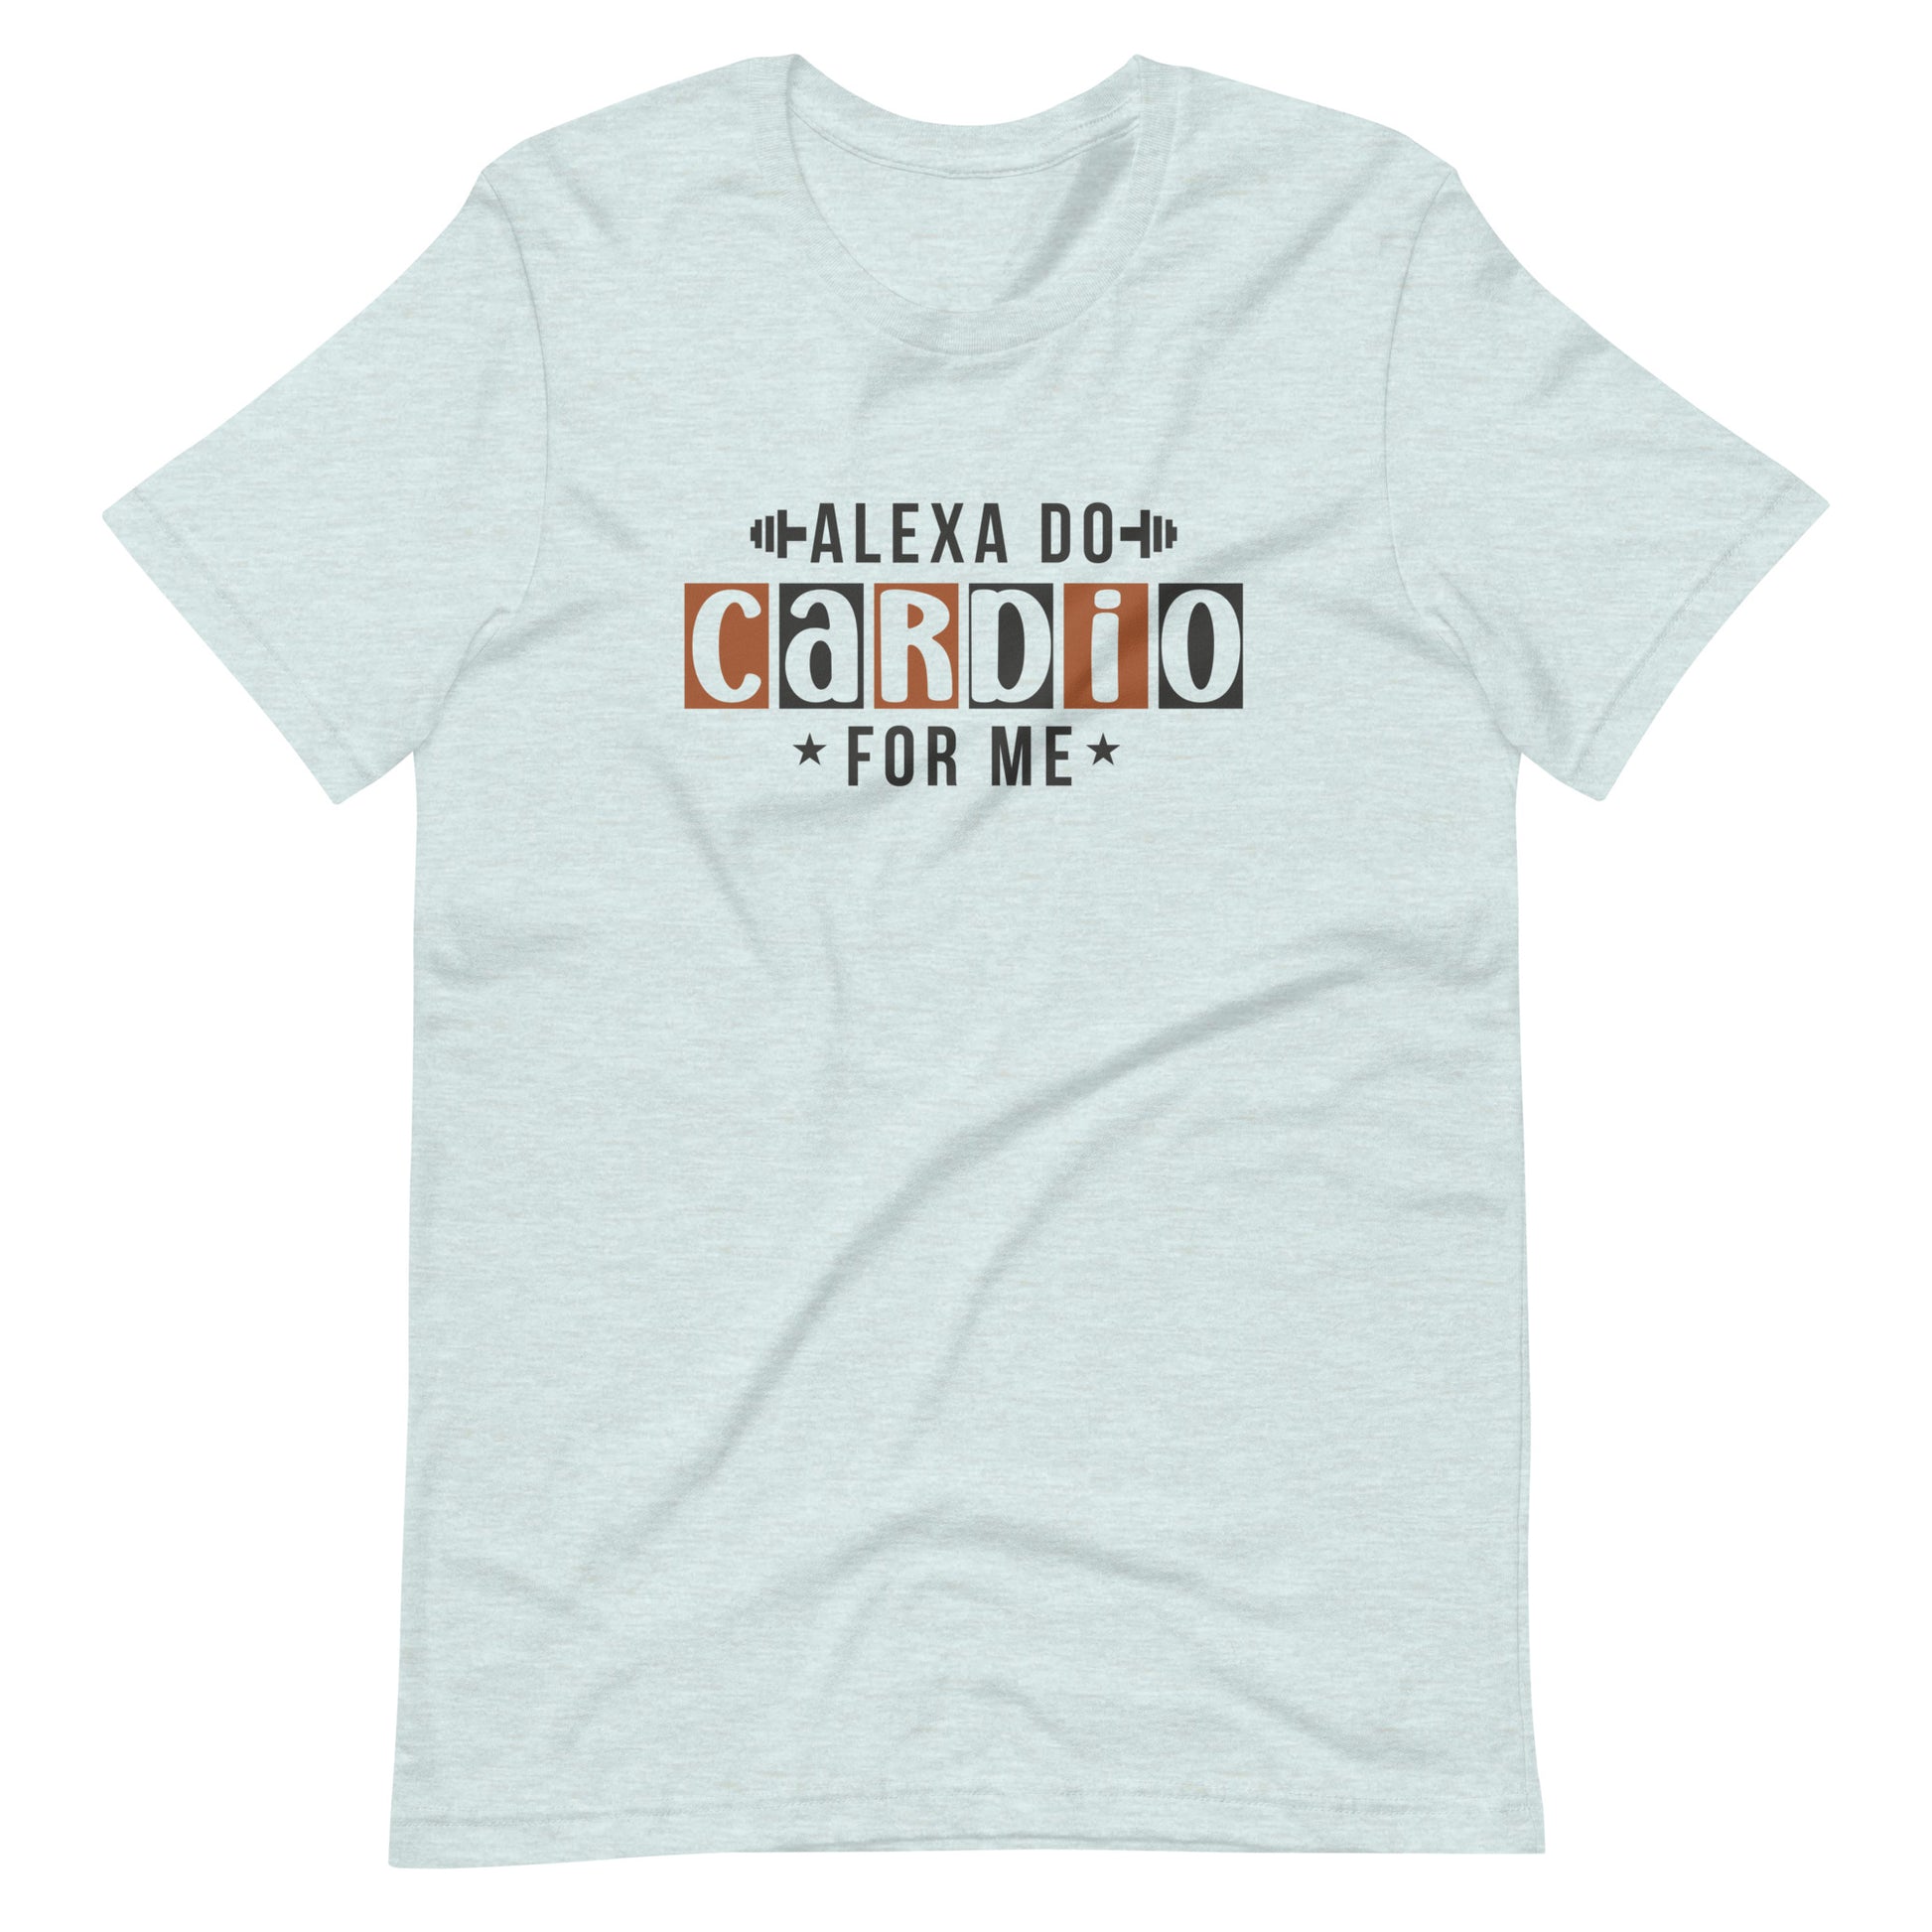 Alexa do cardio for me unisex t-shirt The Workout Inspiration